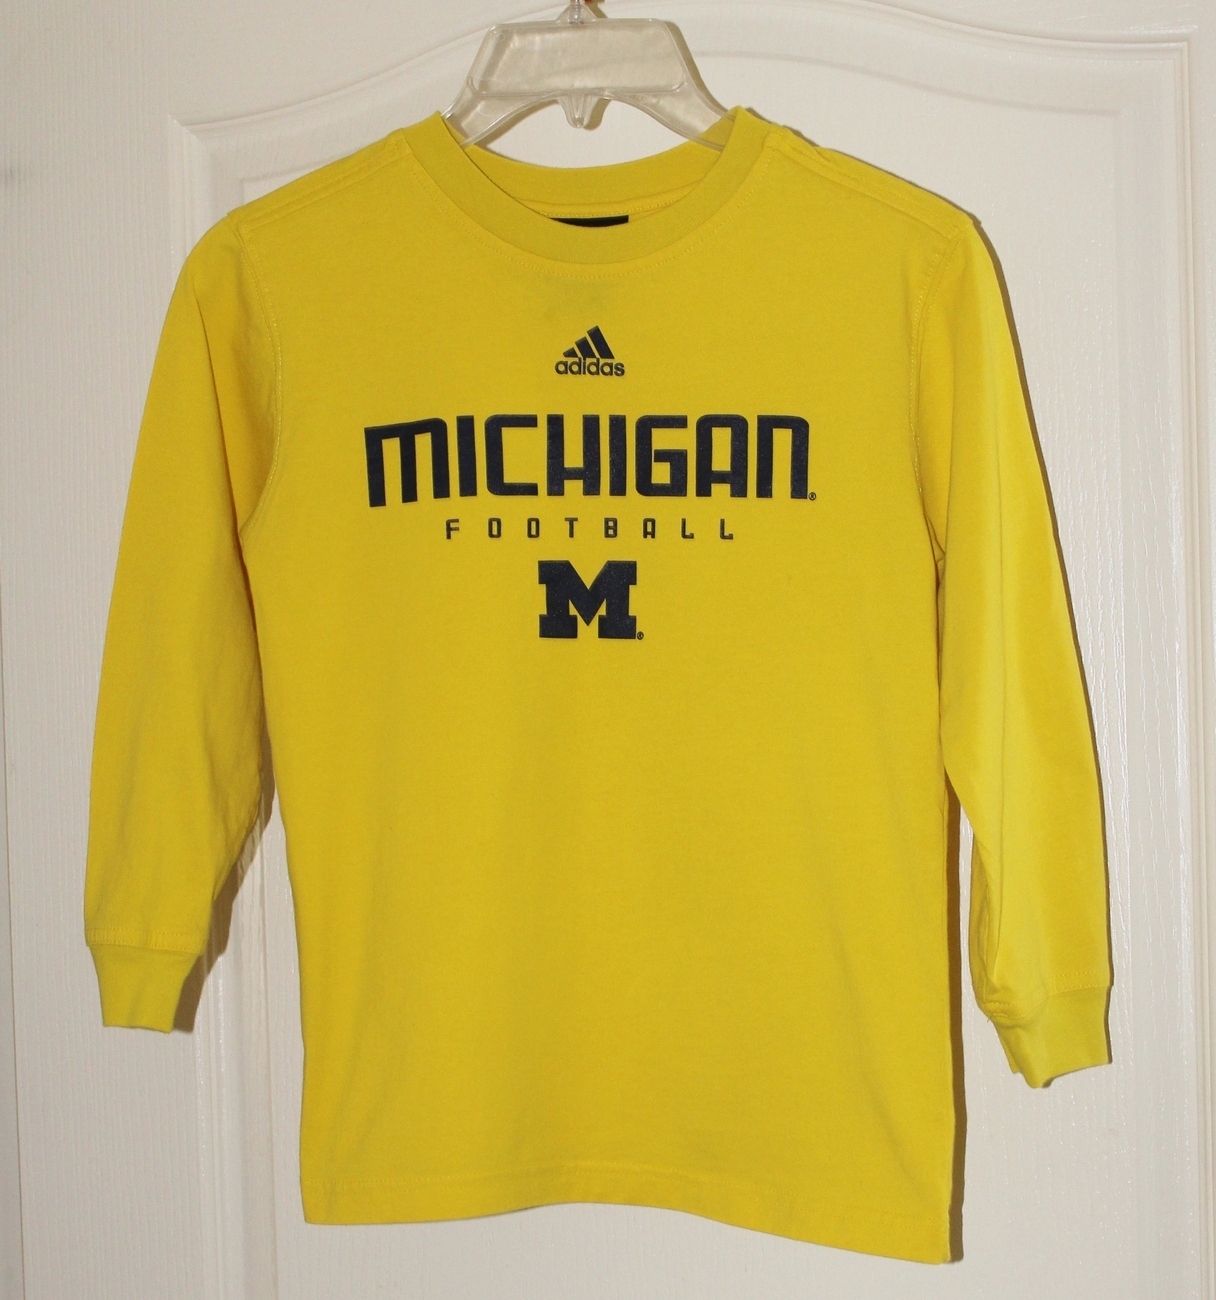 Michigan Football Shirt Jersey Size Youth Small 8-10 - Boys' Clothing ...